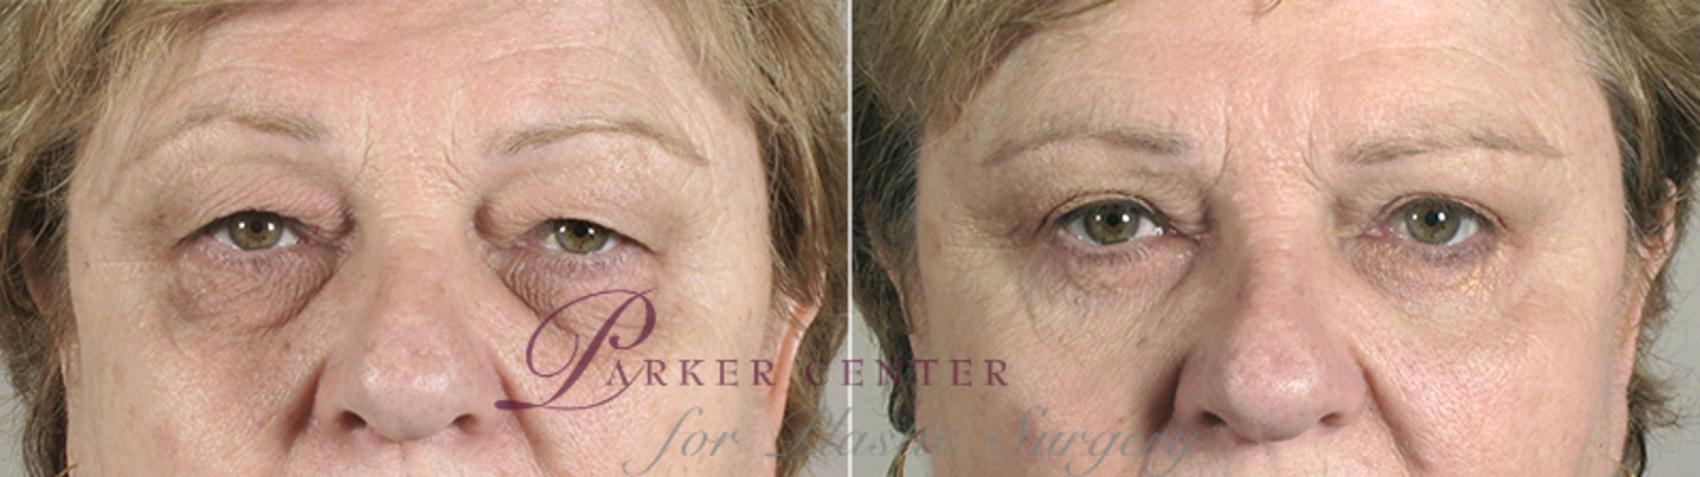 Eyelid Lift Case 75 Before & After View #1 | Paramus, NJ | Parker Center for Plastic Surgery